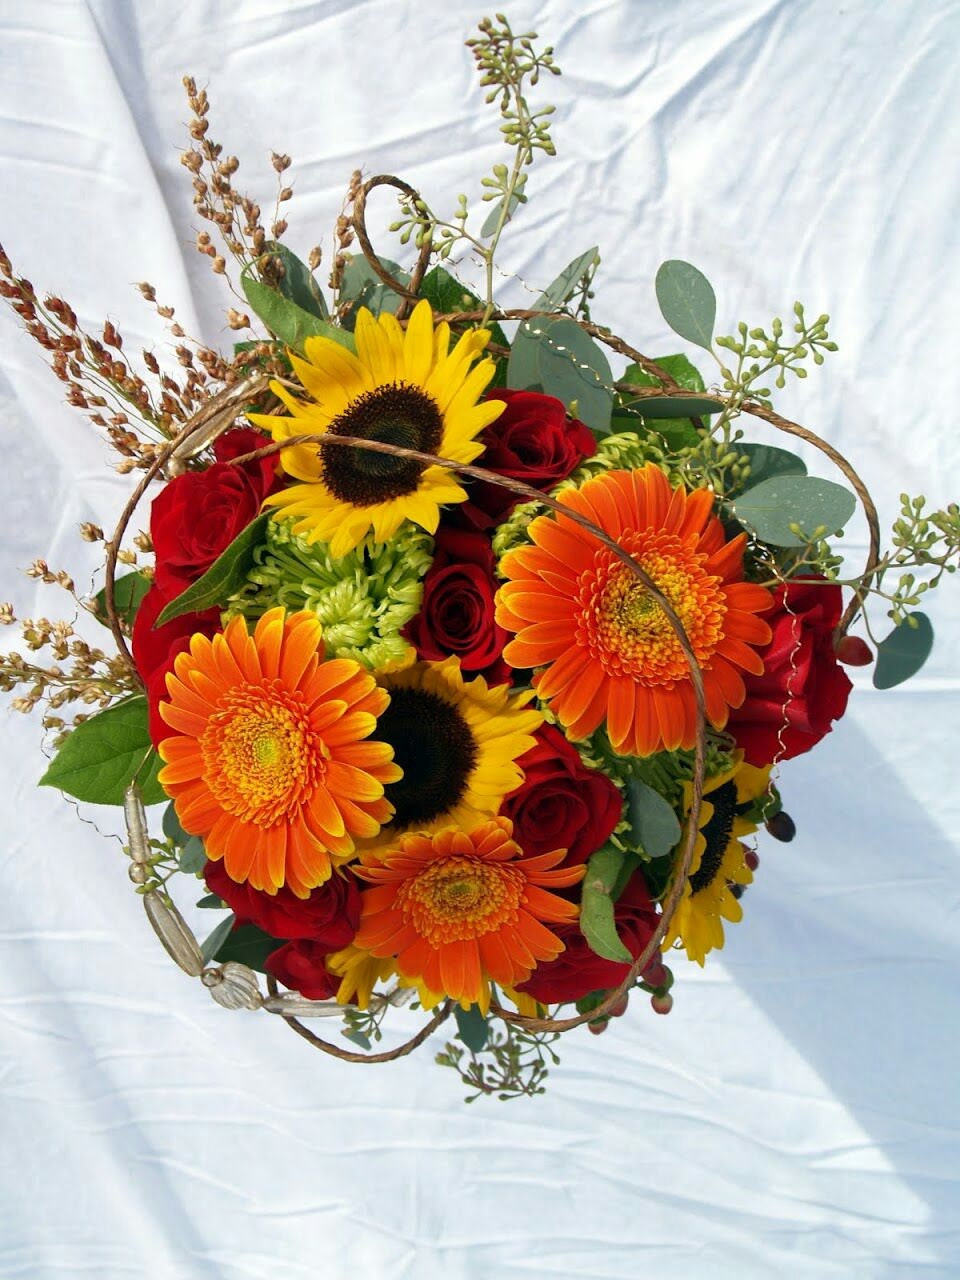 Autumn Wedding Bouquets